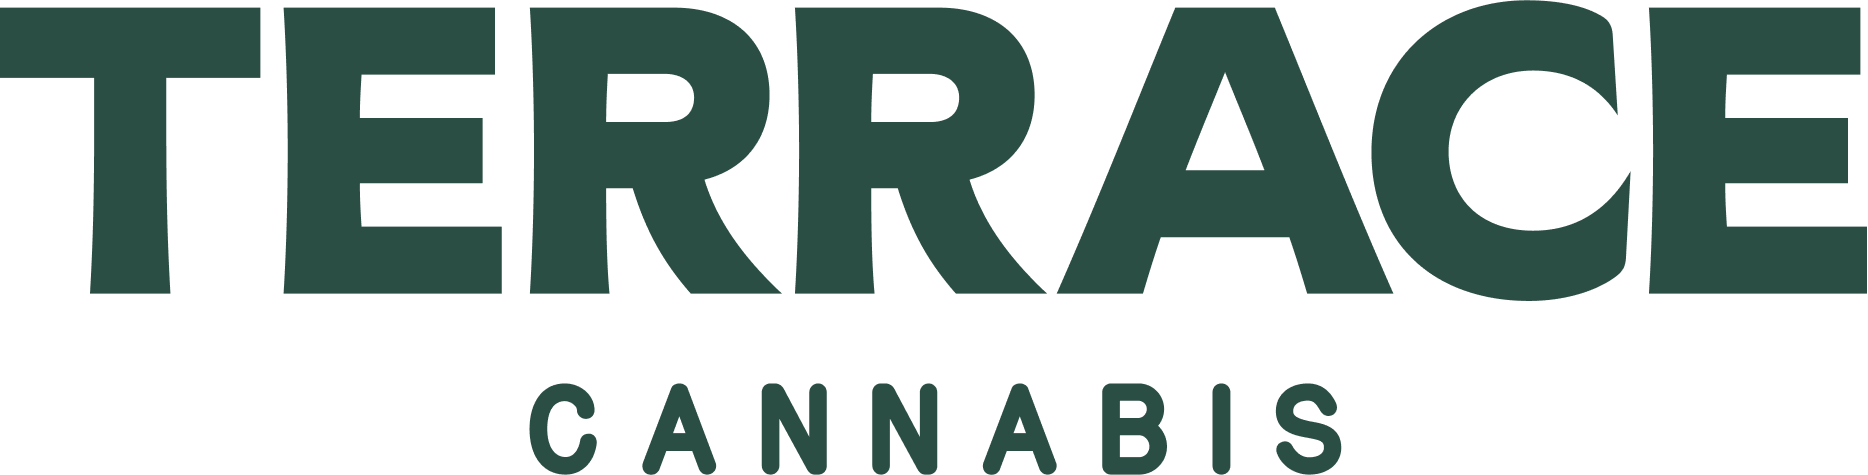 Terrace Cannabis-logo